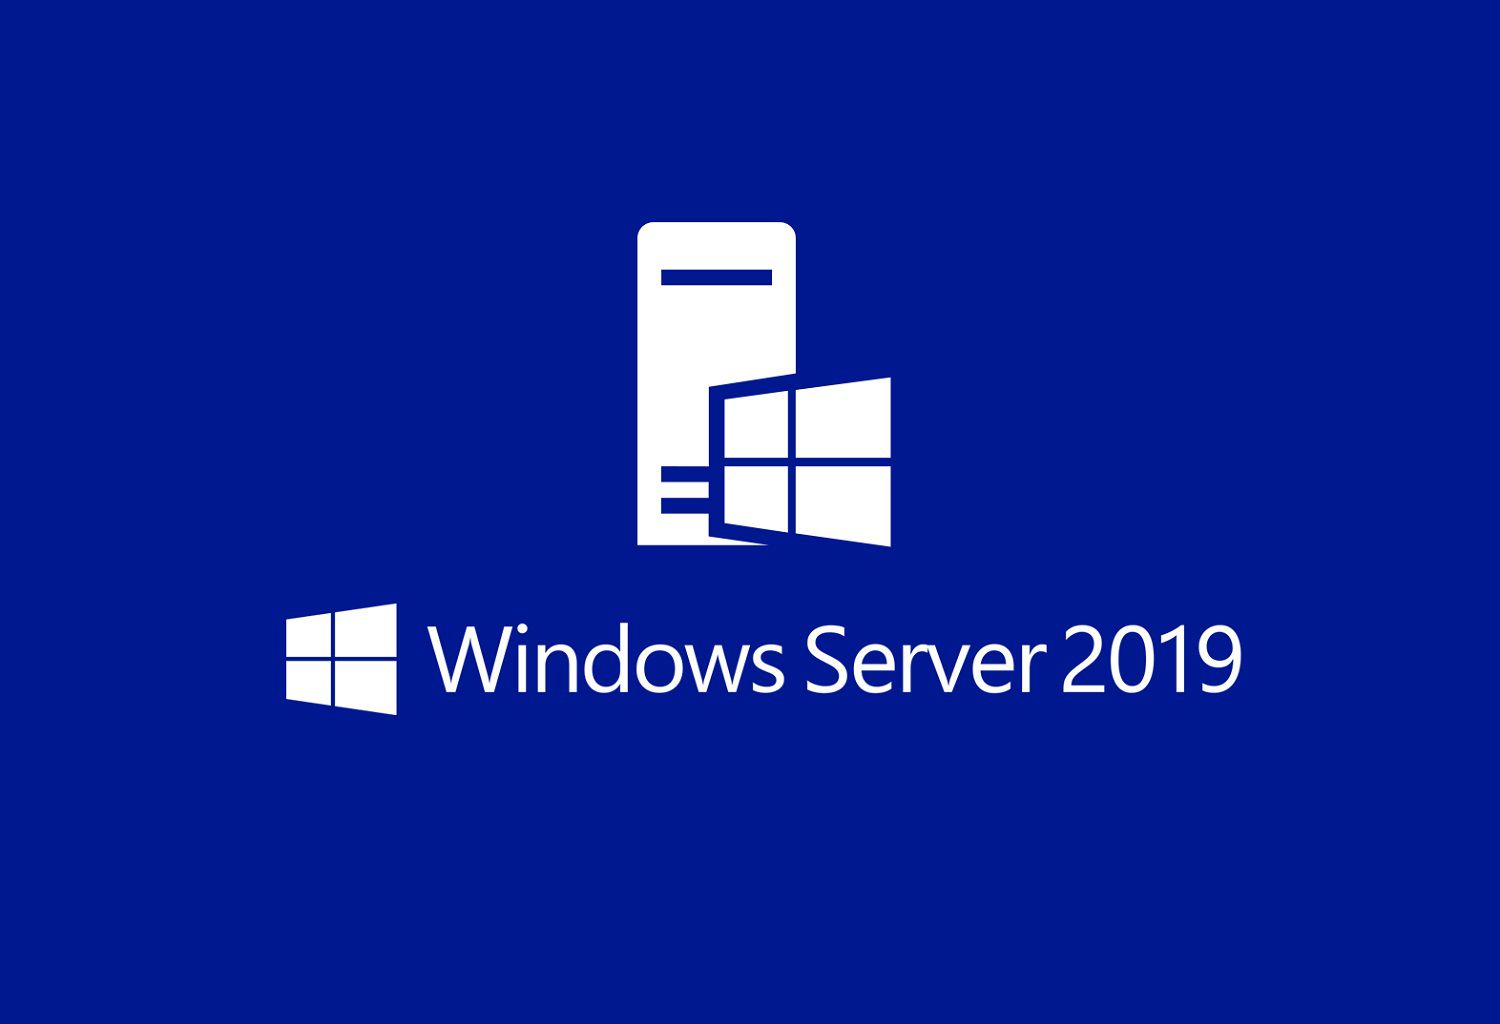 windows 10 server 2019 984da52f283a486eada7a2b29e6e940c